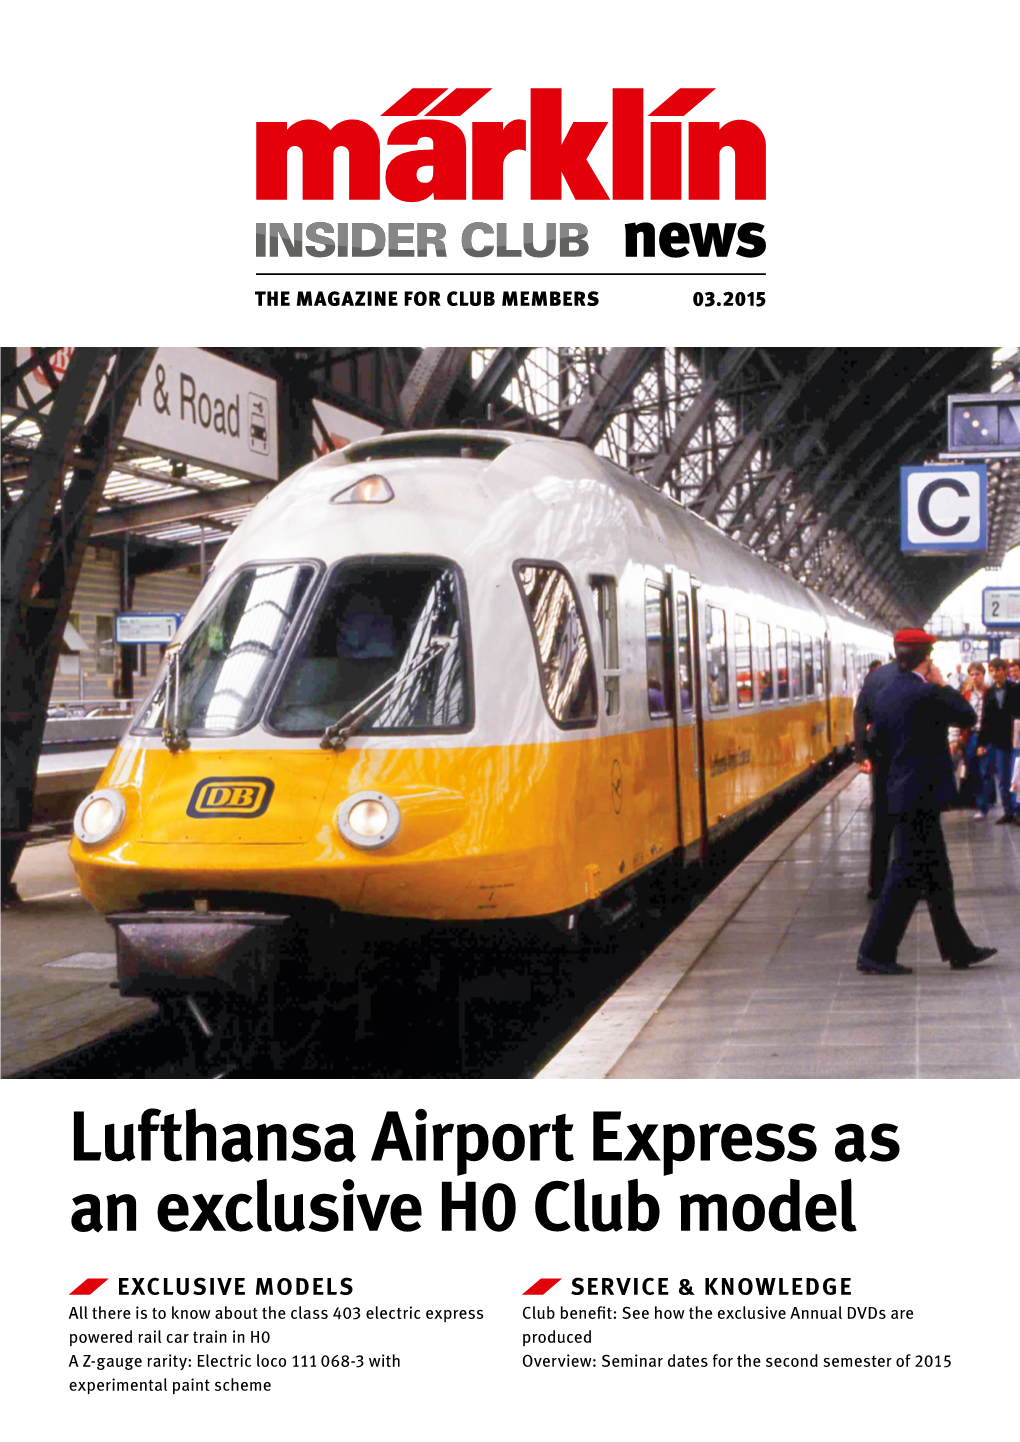 Lufthansa Airport Express As an Exclusive H0 Club Model